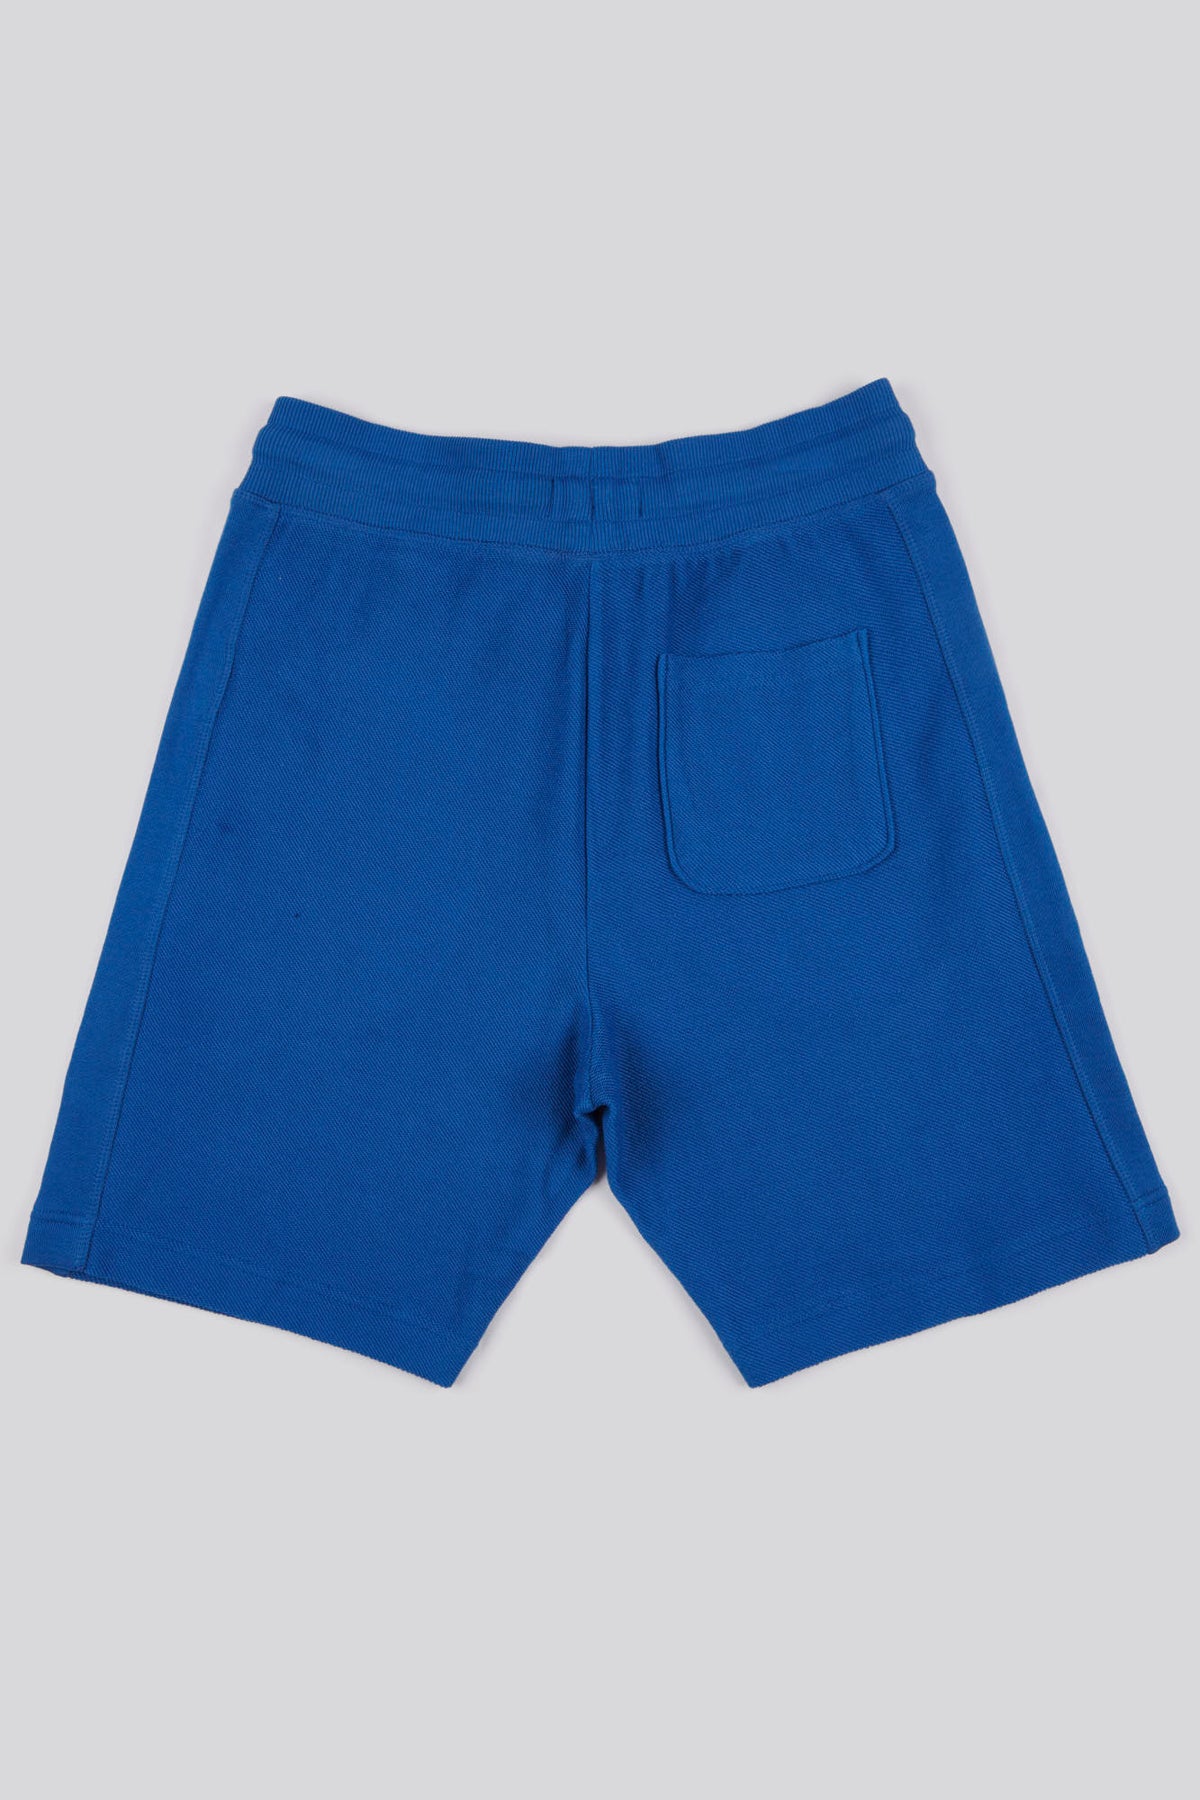 Mens Classic Fit Texture Reverse Shorts in Deja Vu Blue